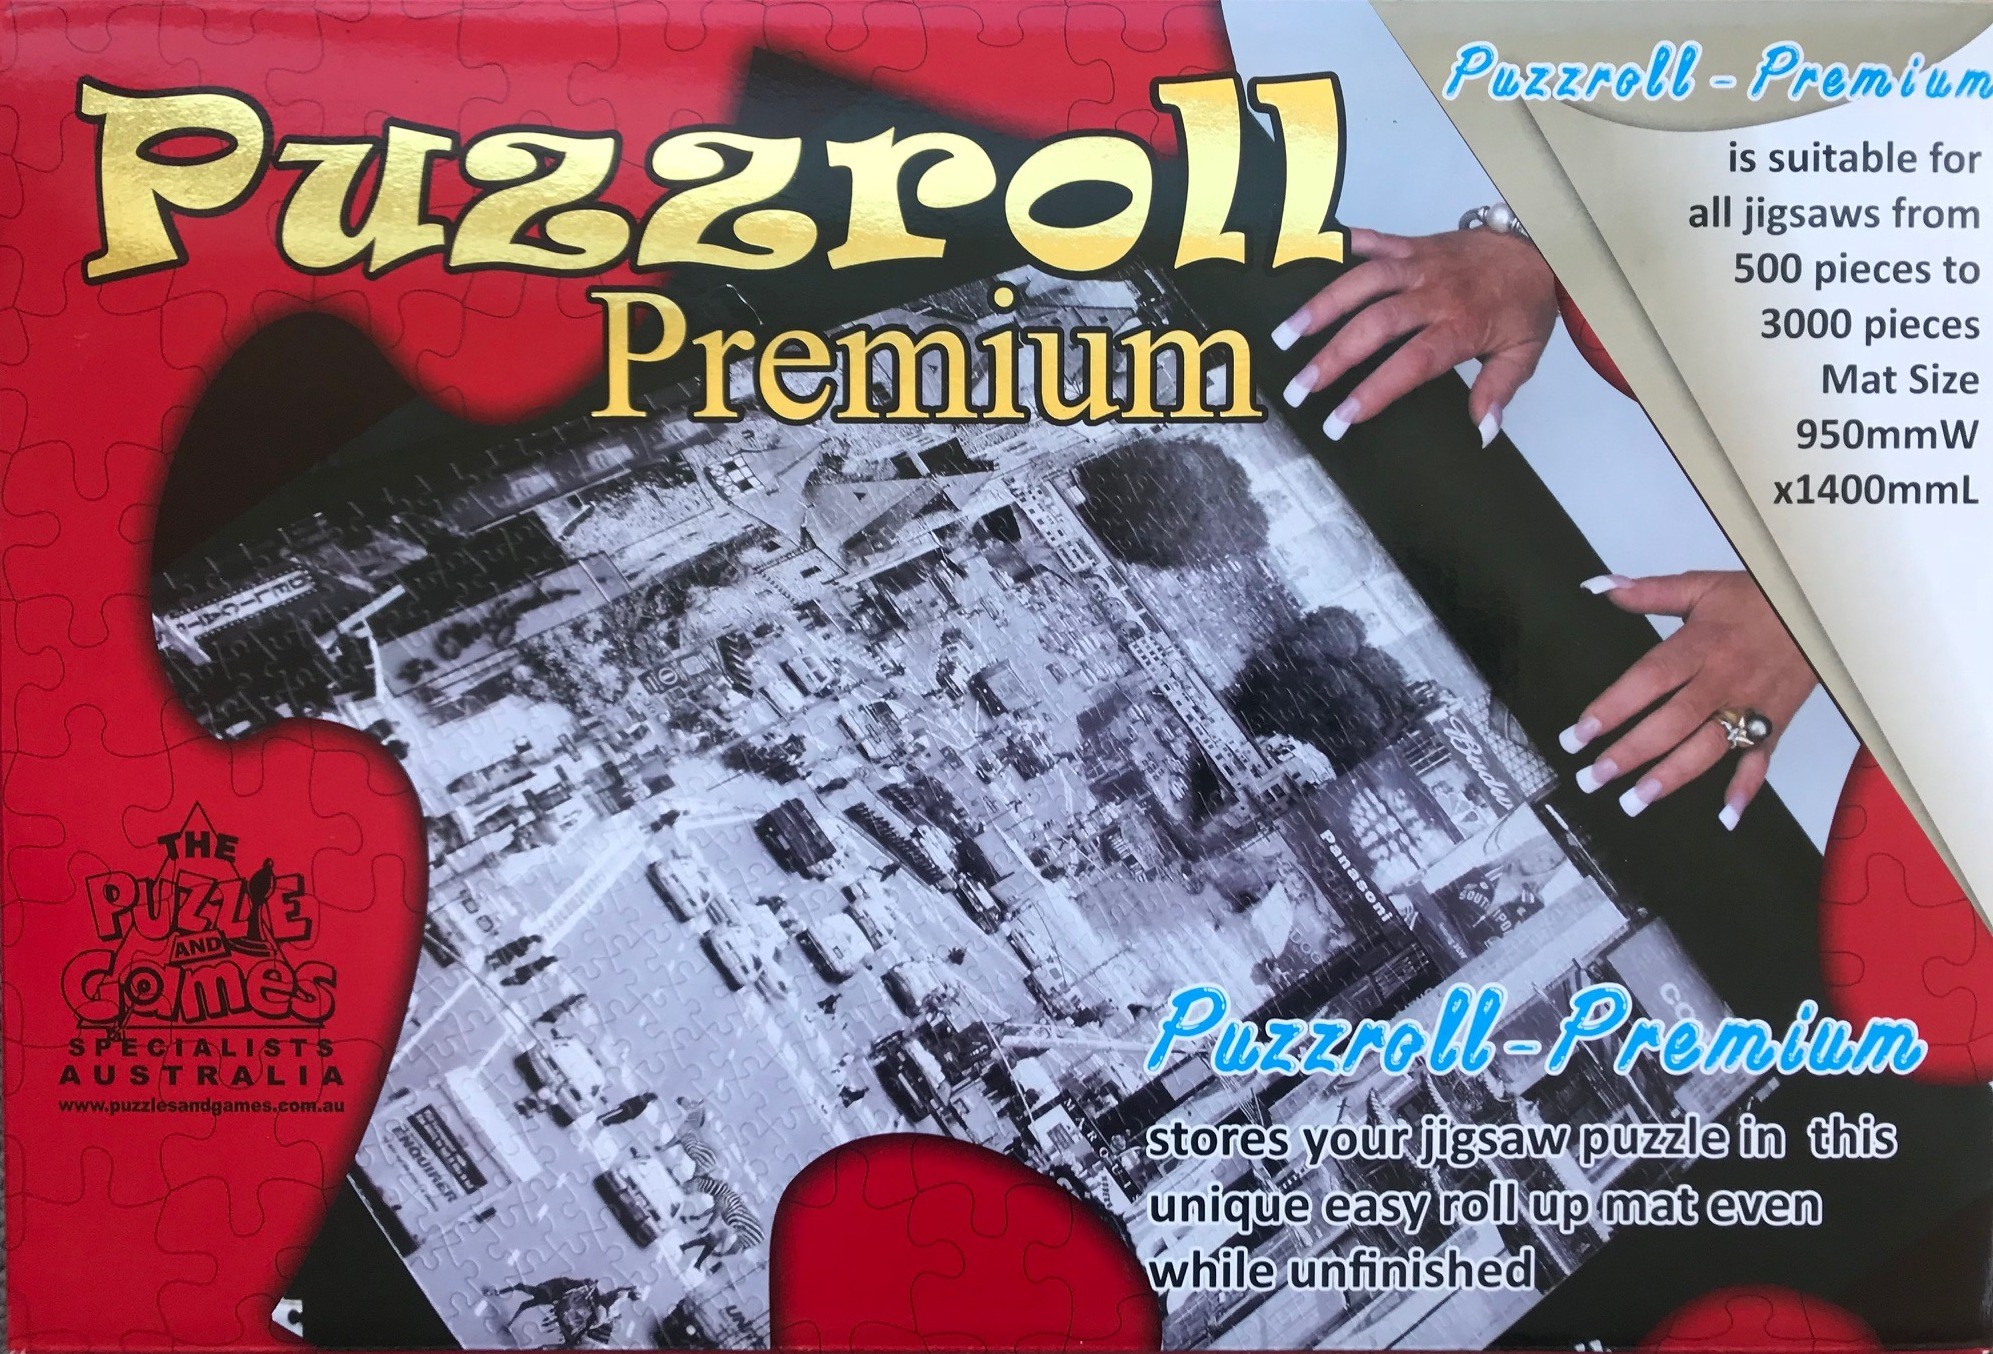 Jigsaw Puzzroll Premium - Jigsaw storage roll, Puzzroll Premium to suit 500-3000 piece, mat size 950cm x 1400cm